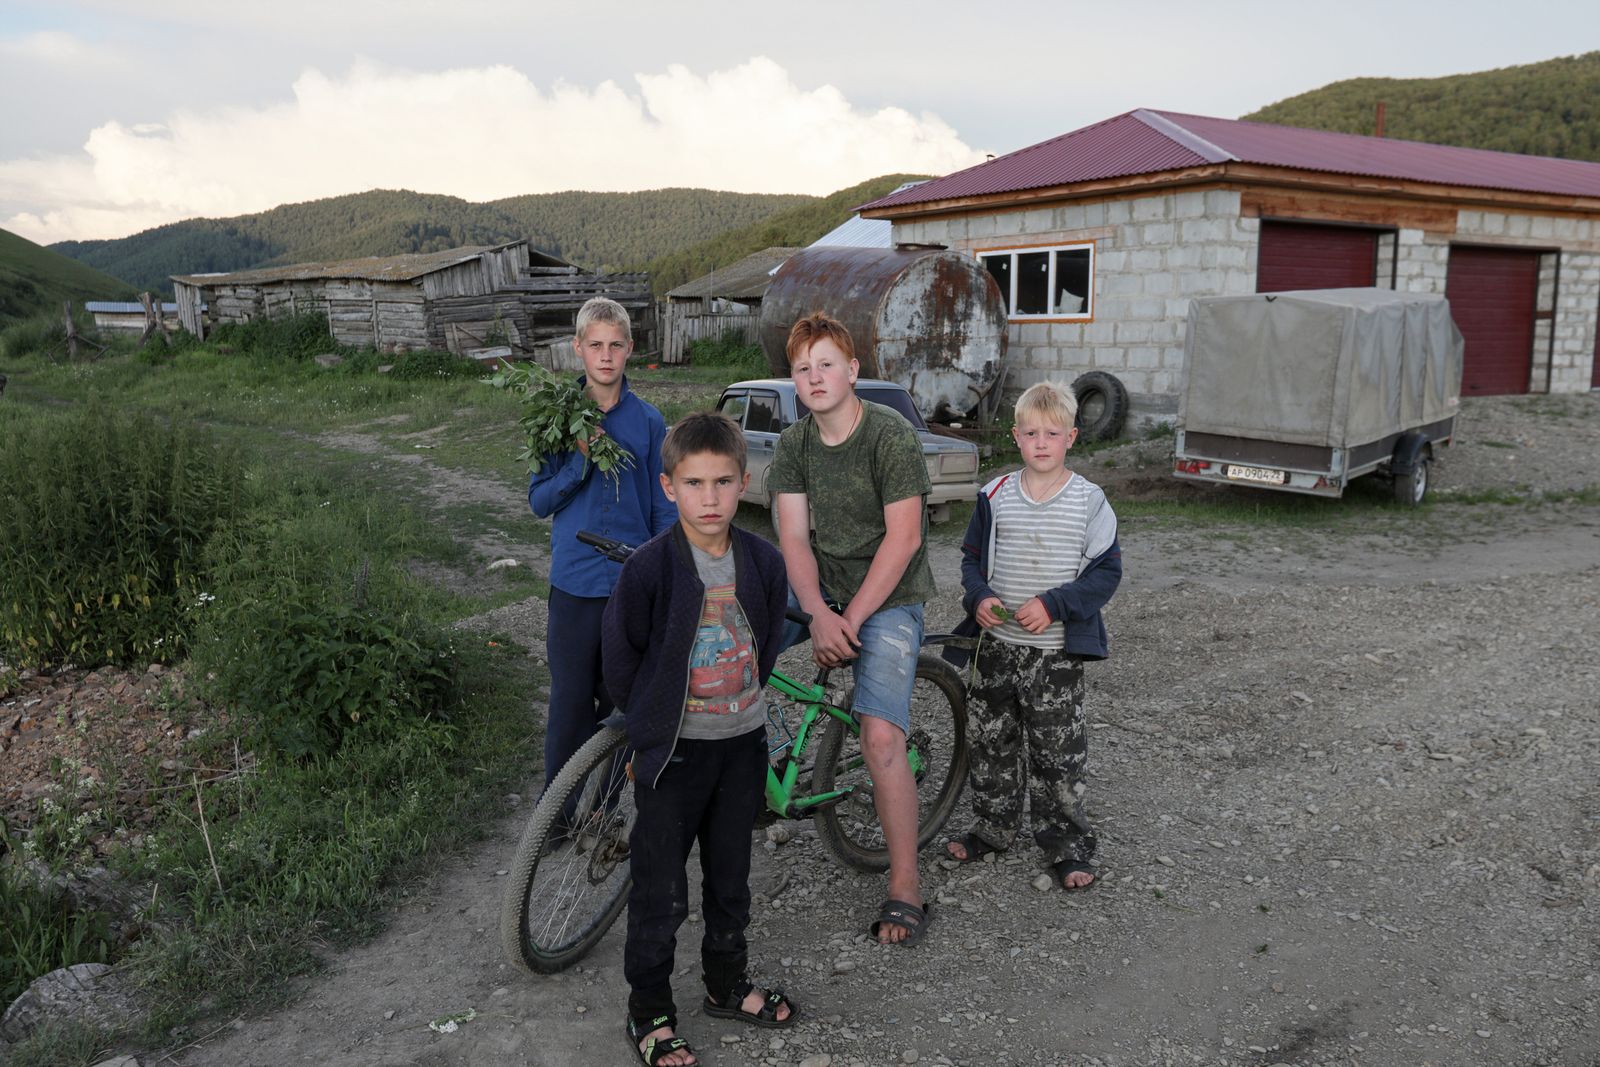 © NADEZHDA ARESHINA - Egor, Sasha, Maxim, Sergei. Kuyacha village, Altay region, Russian Federation, 2021.